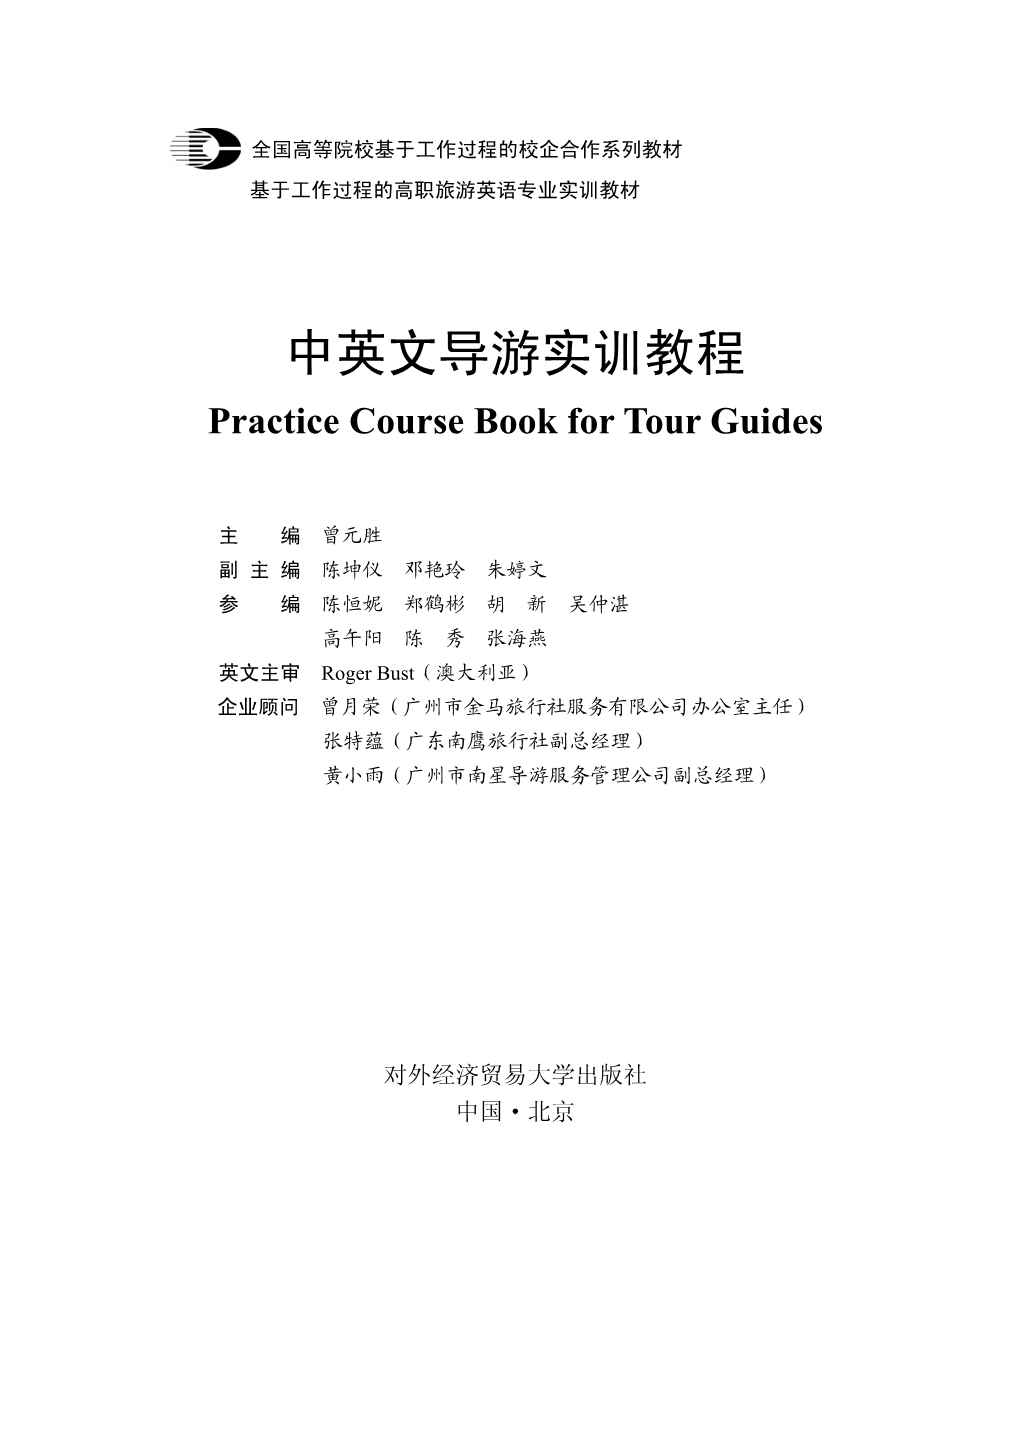 中英文导游实训教程 Practice Course Book for Tour Guides